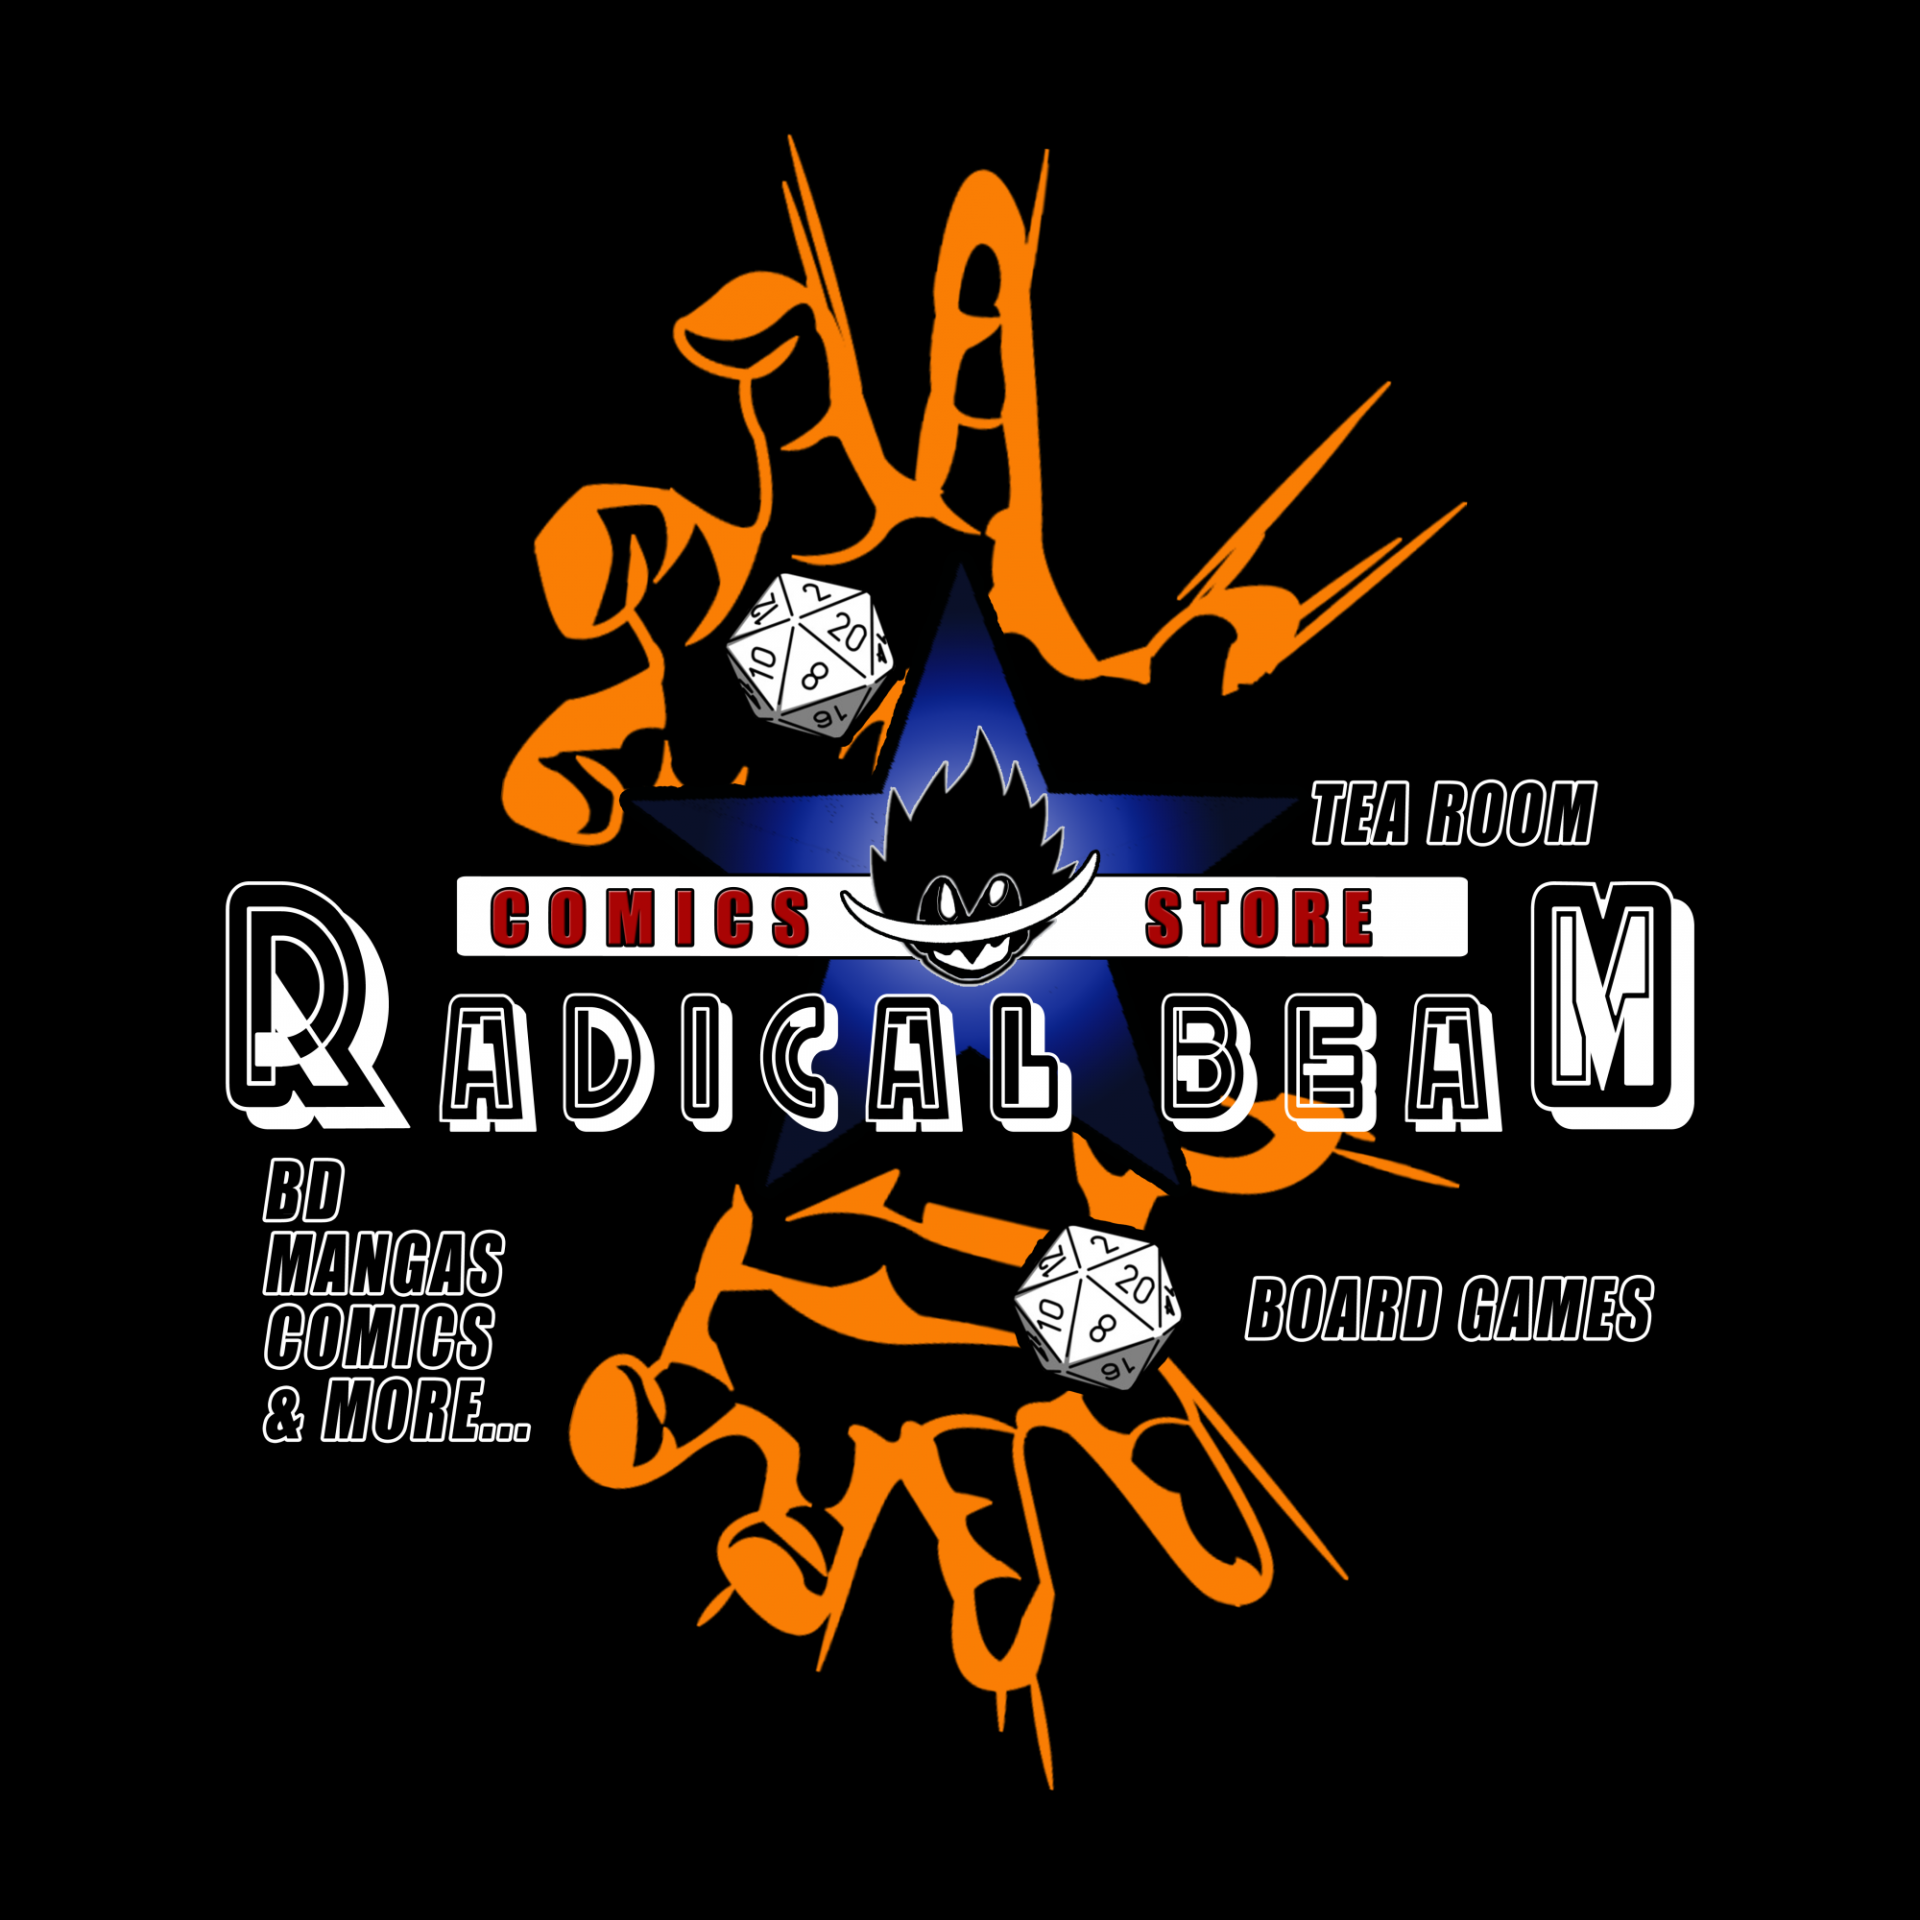 Radical beam logo